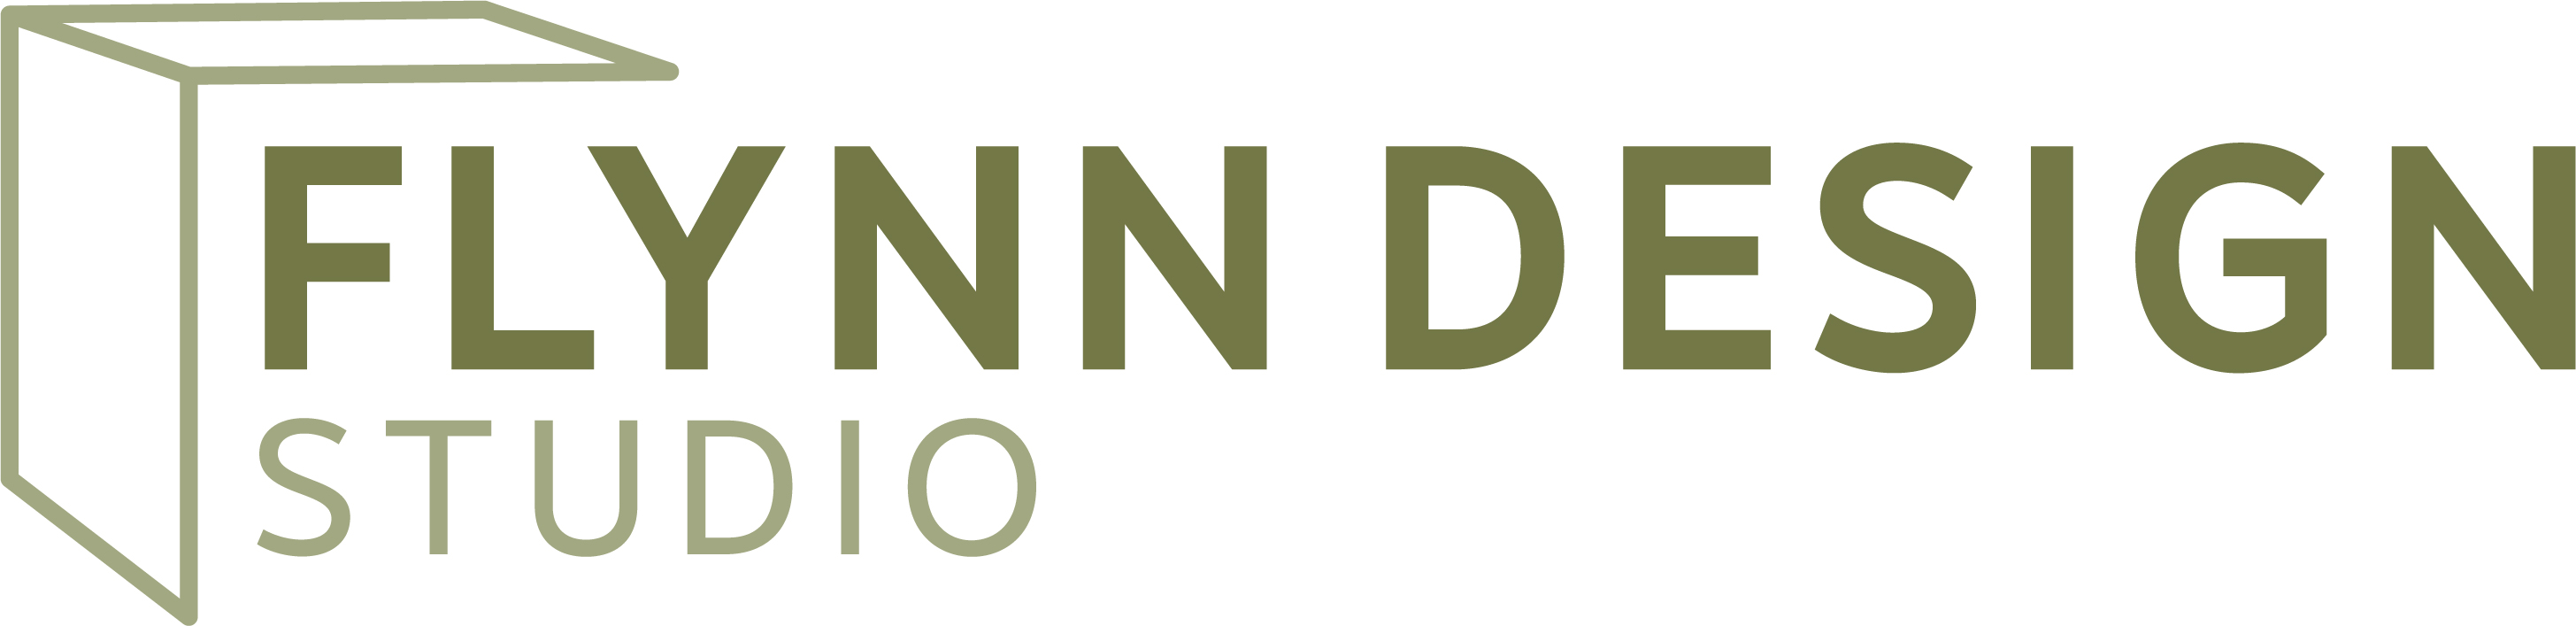 Flynn Design Studio company logo